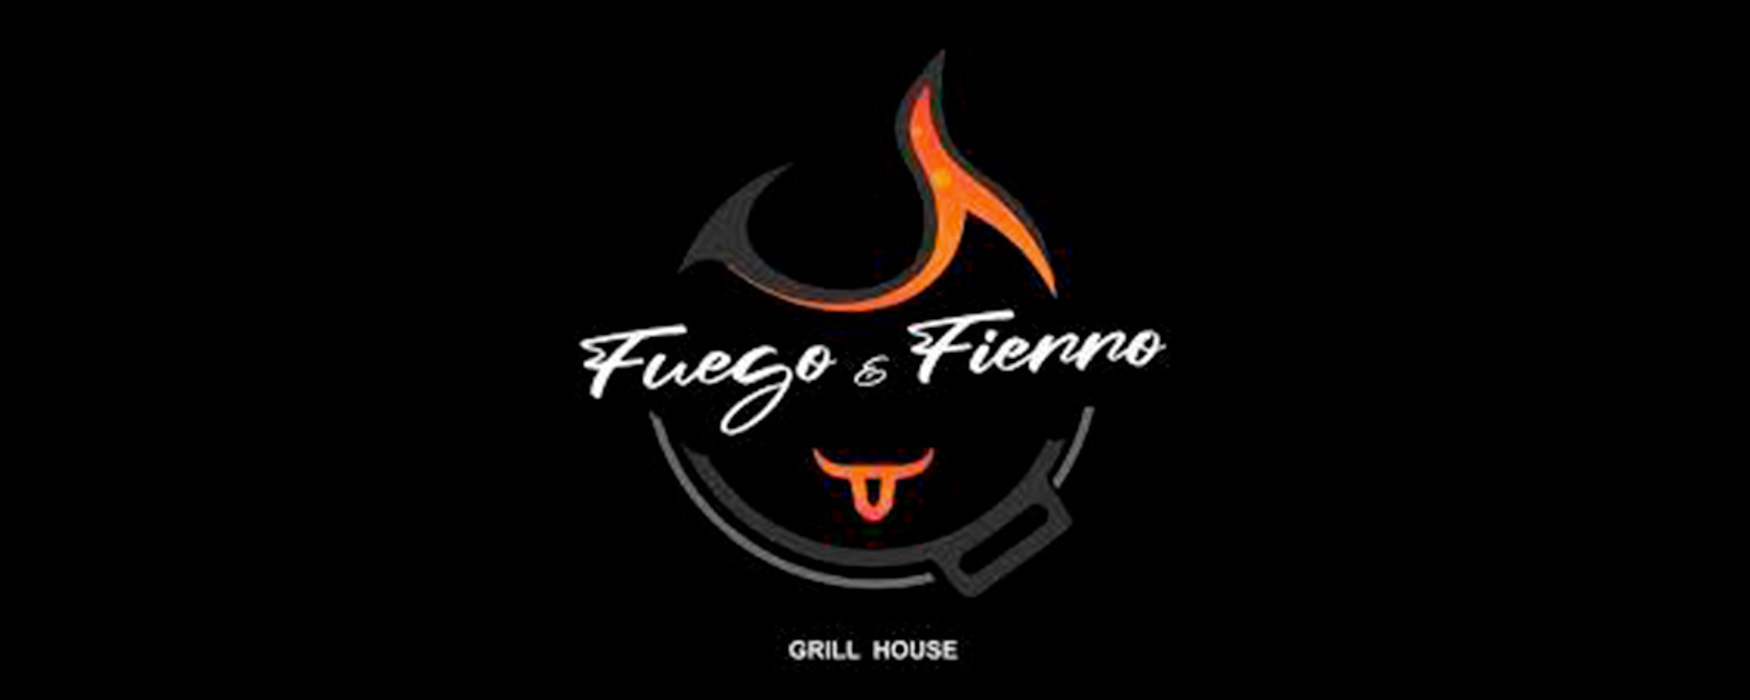 Fuego & Fierro Grill House